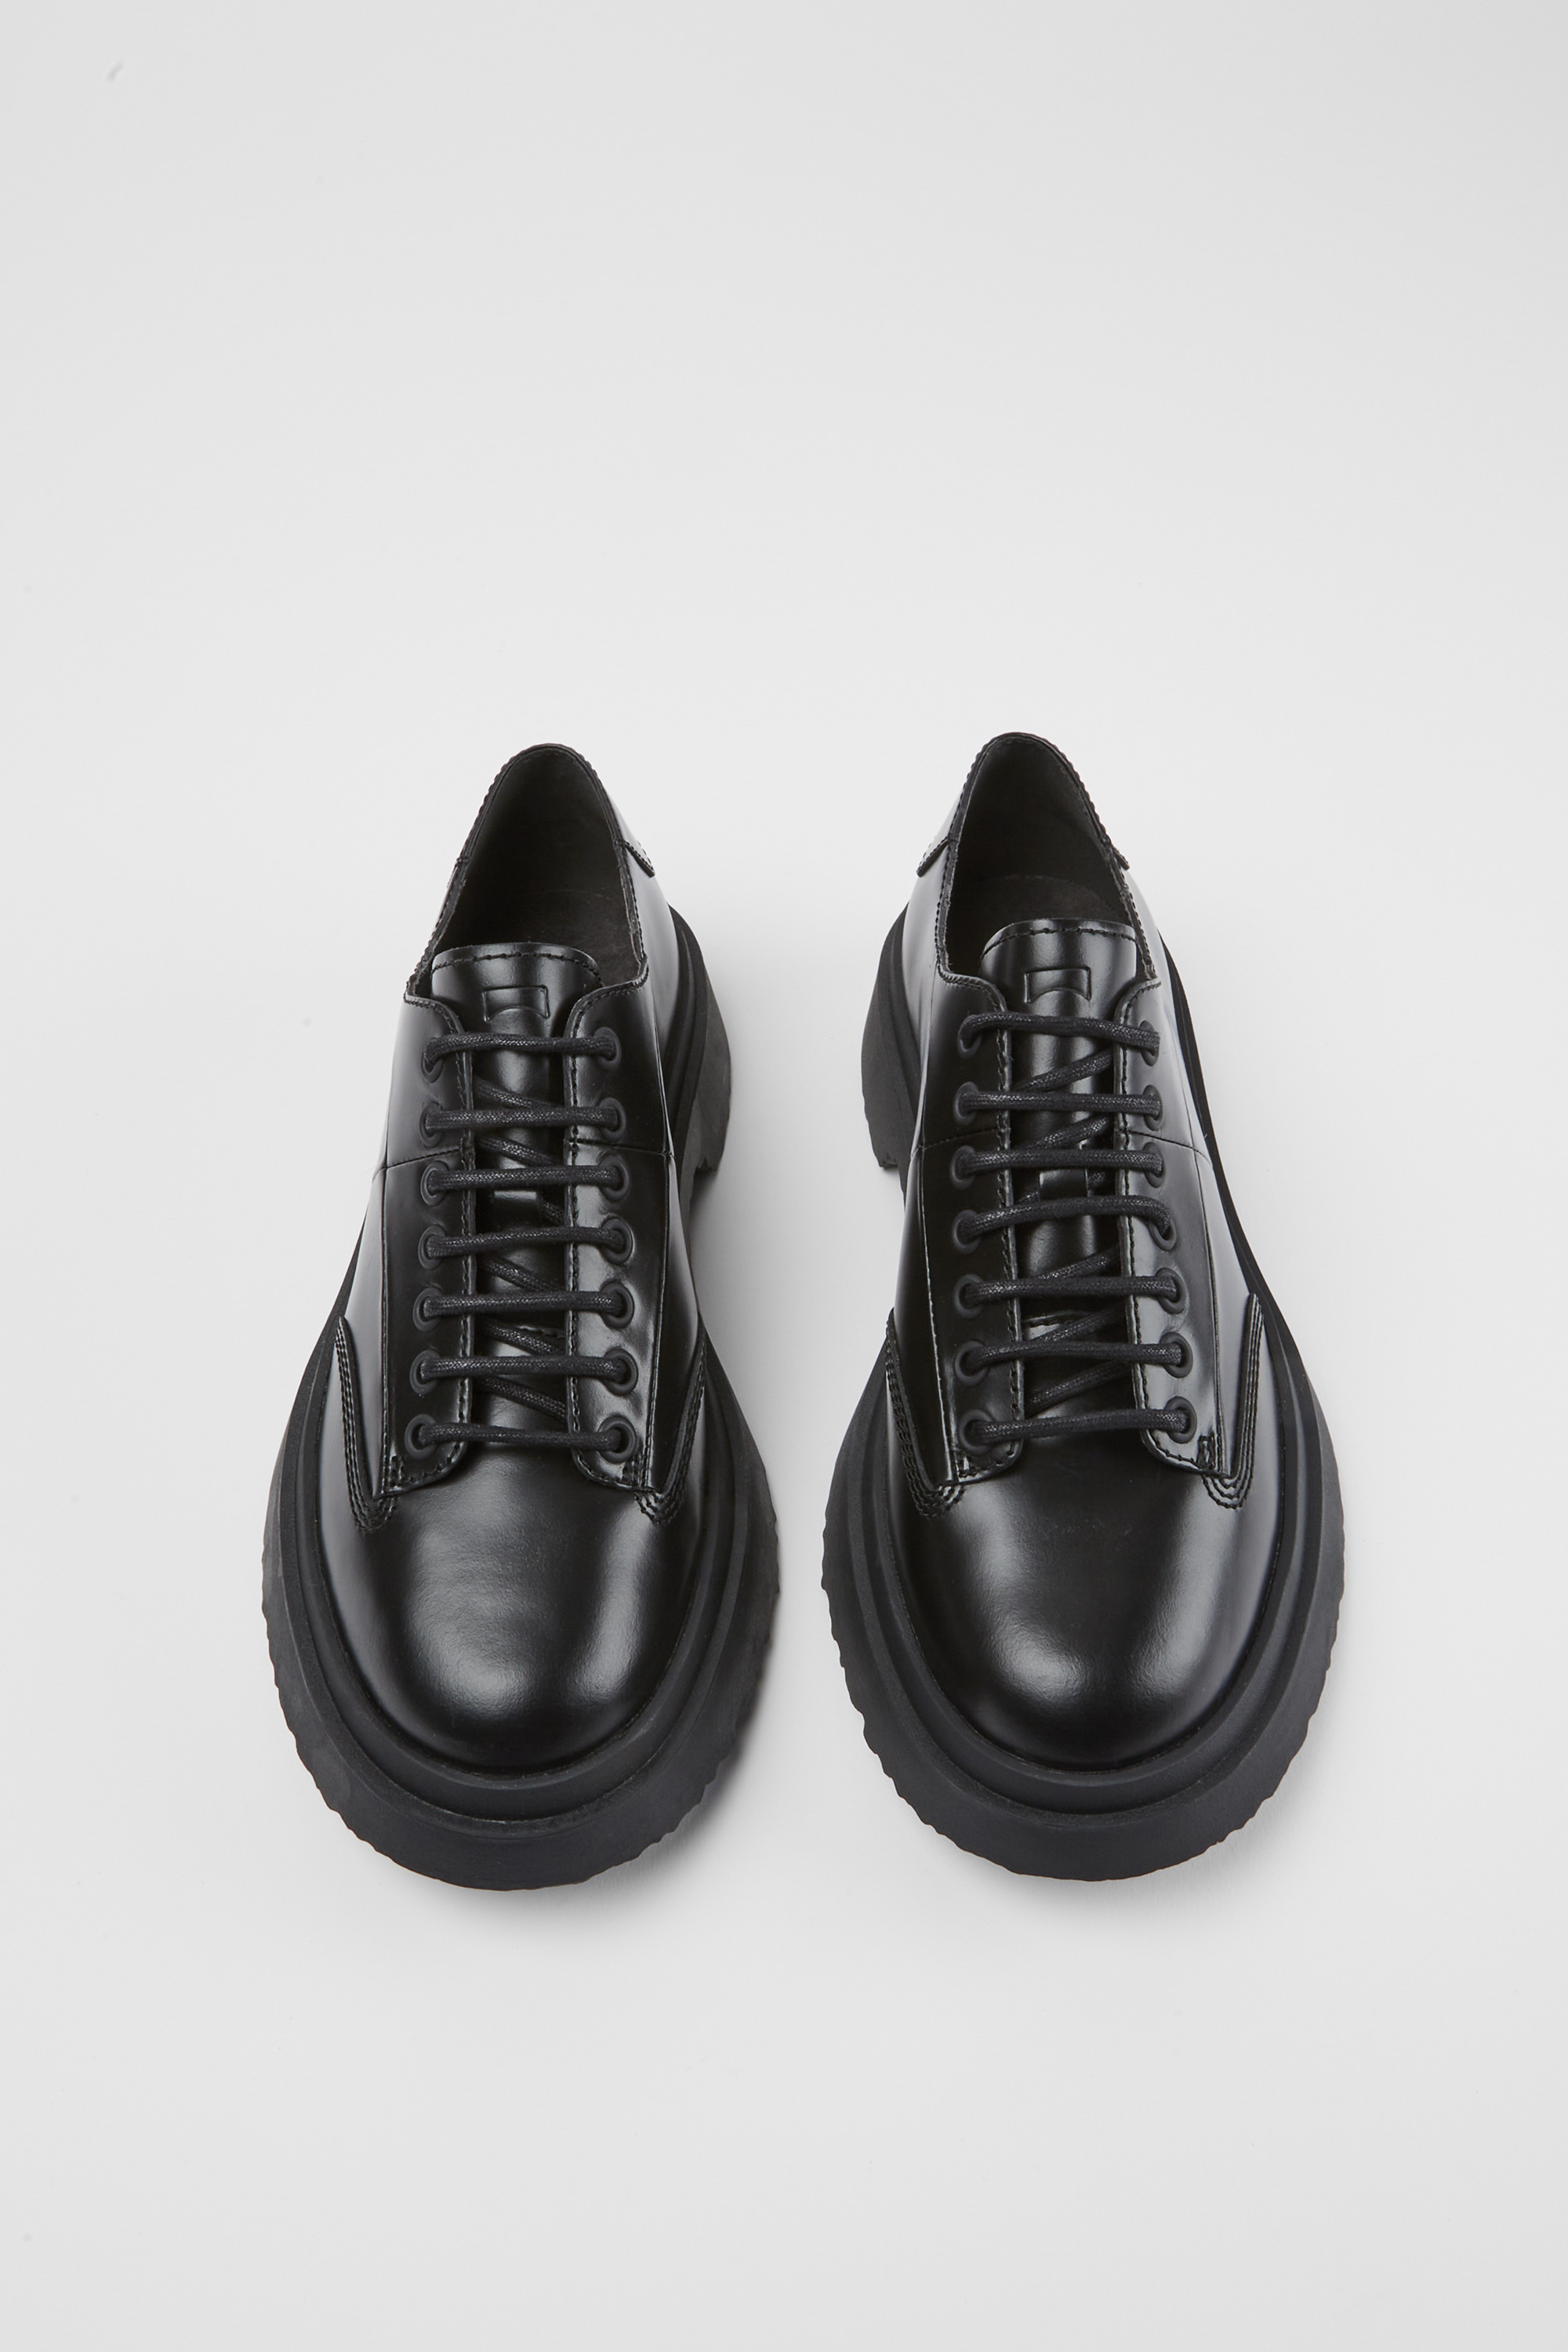 Walden Black Formal Shoes for Men - Autumn/Winter collection - Camper USA